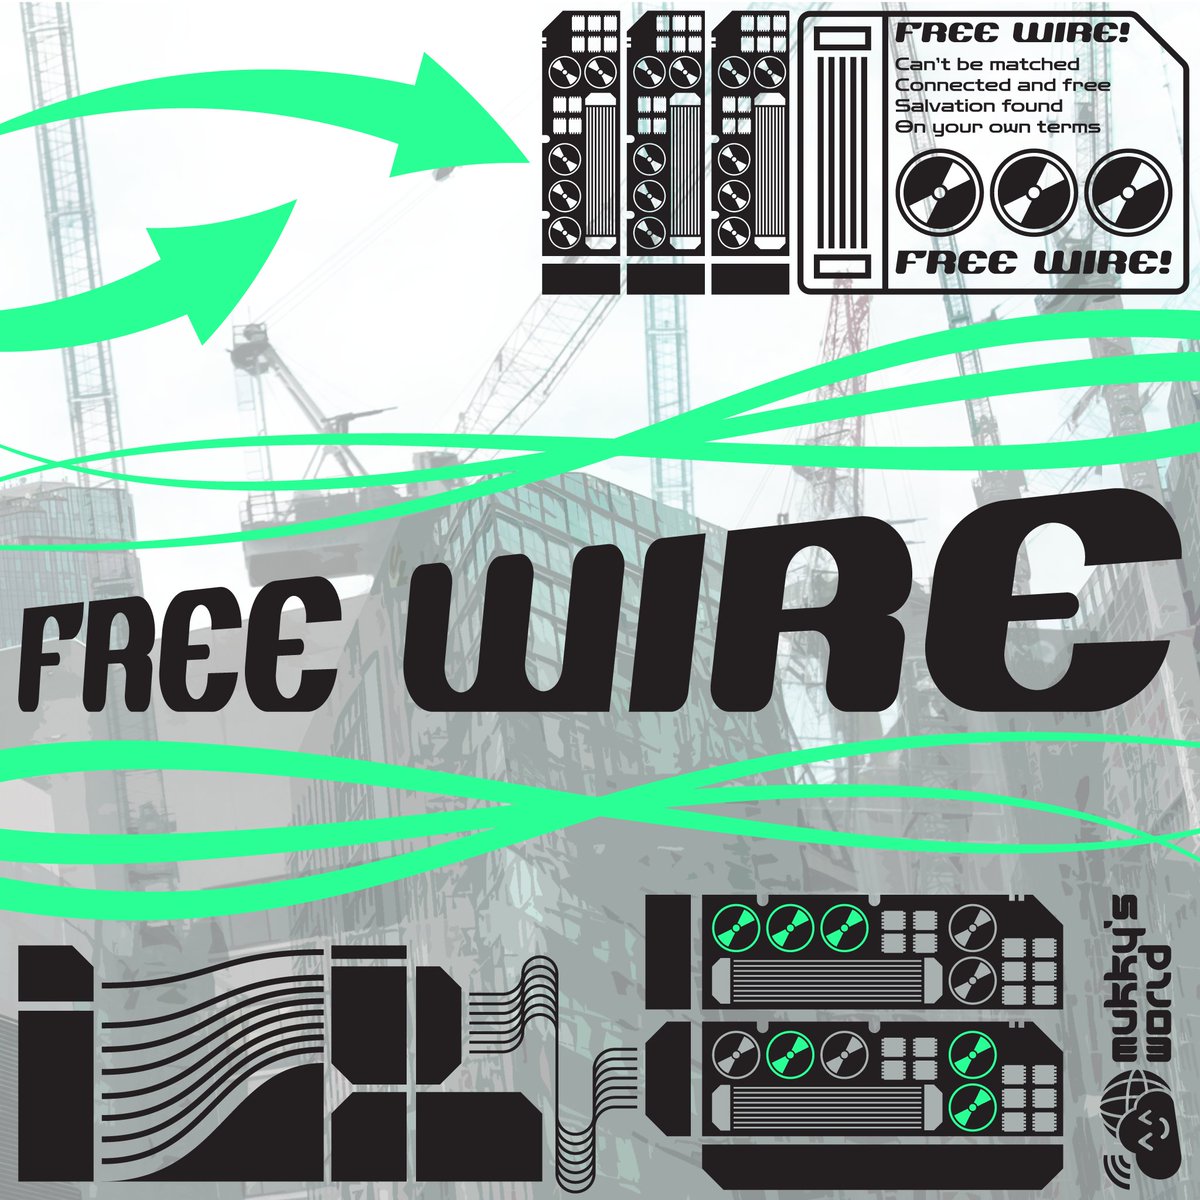 Free Wire // MaySet23 - 07
//
#y2k #vectorheart